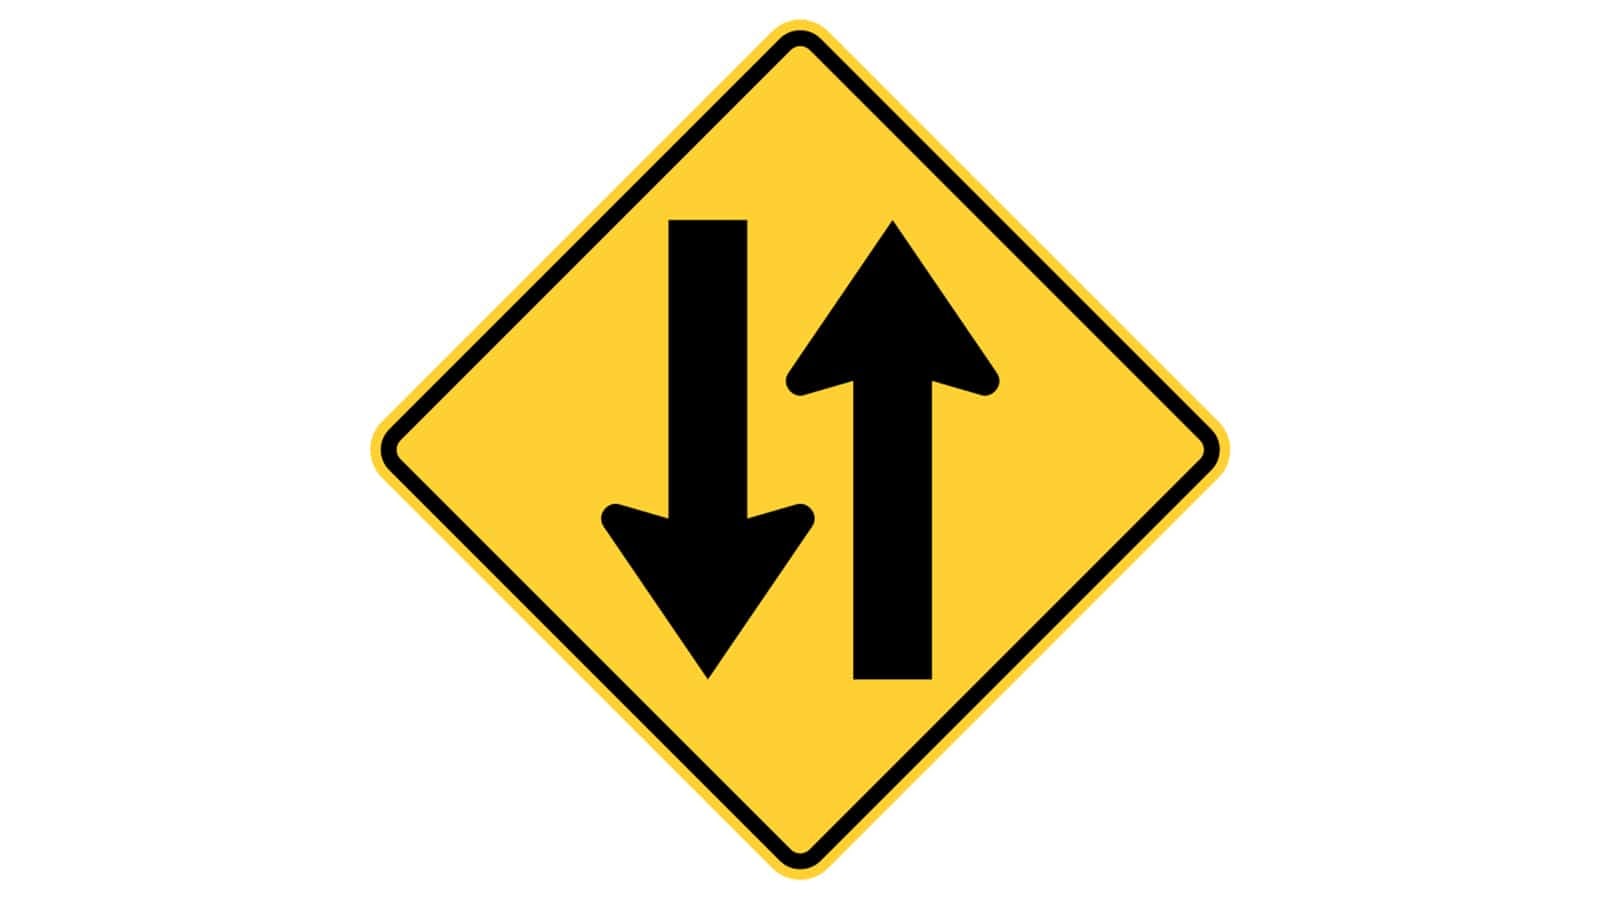 Warning sign Two-Way Traffic